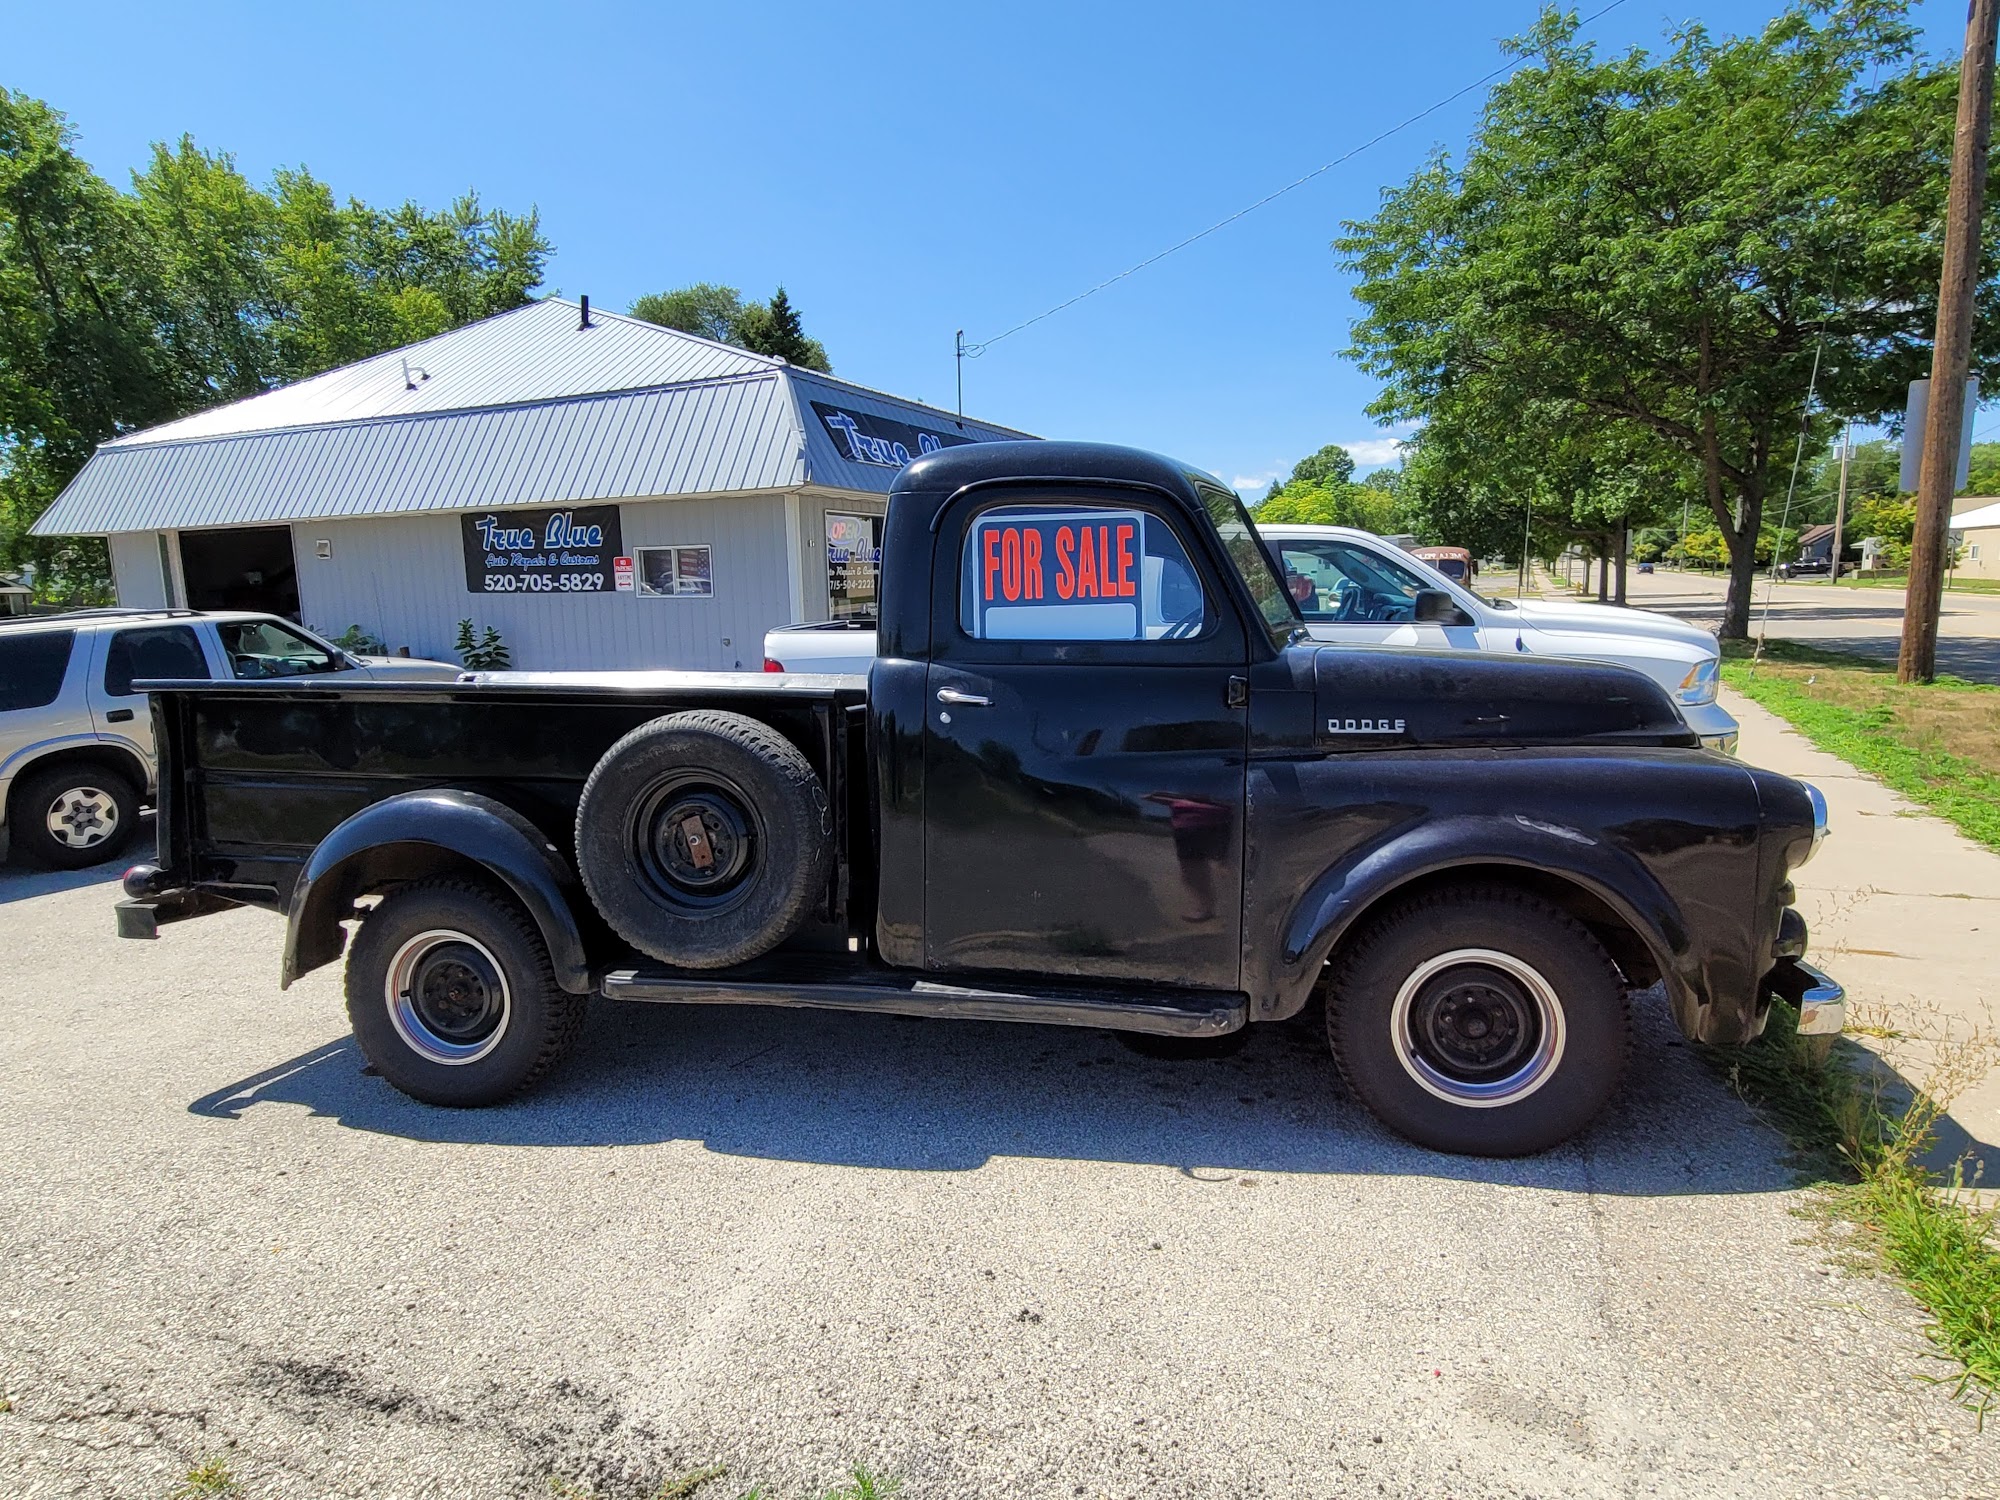 True Blue Auto Repair & Customs 3105 Hall Ave, Marinette Wisconsin 54143